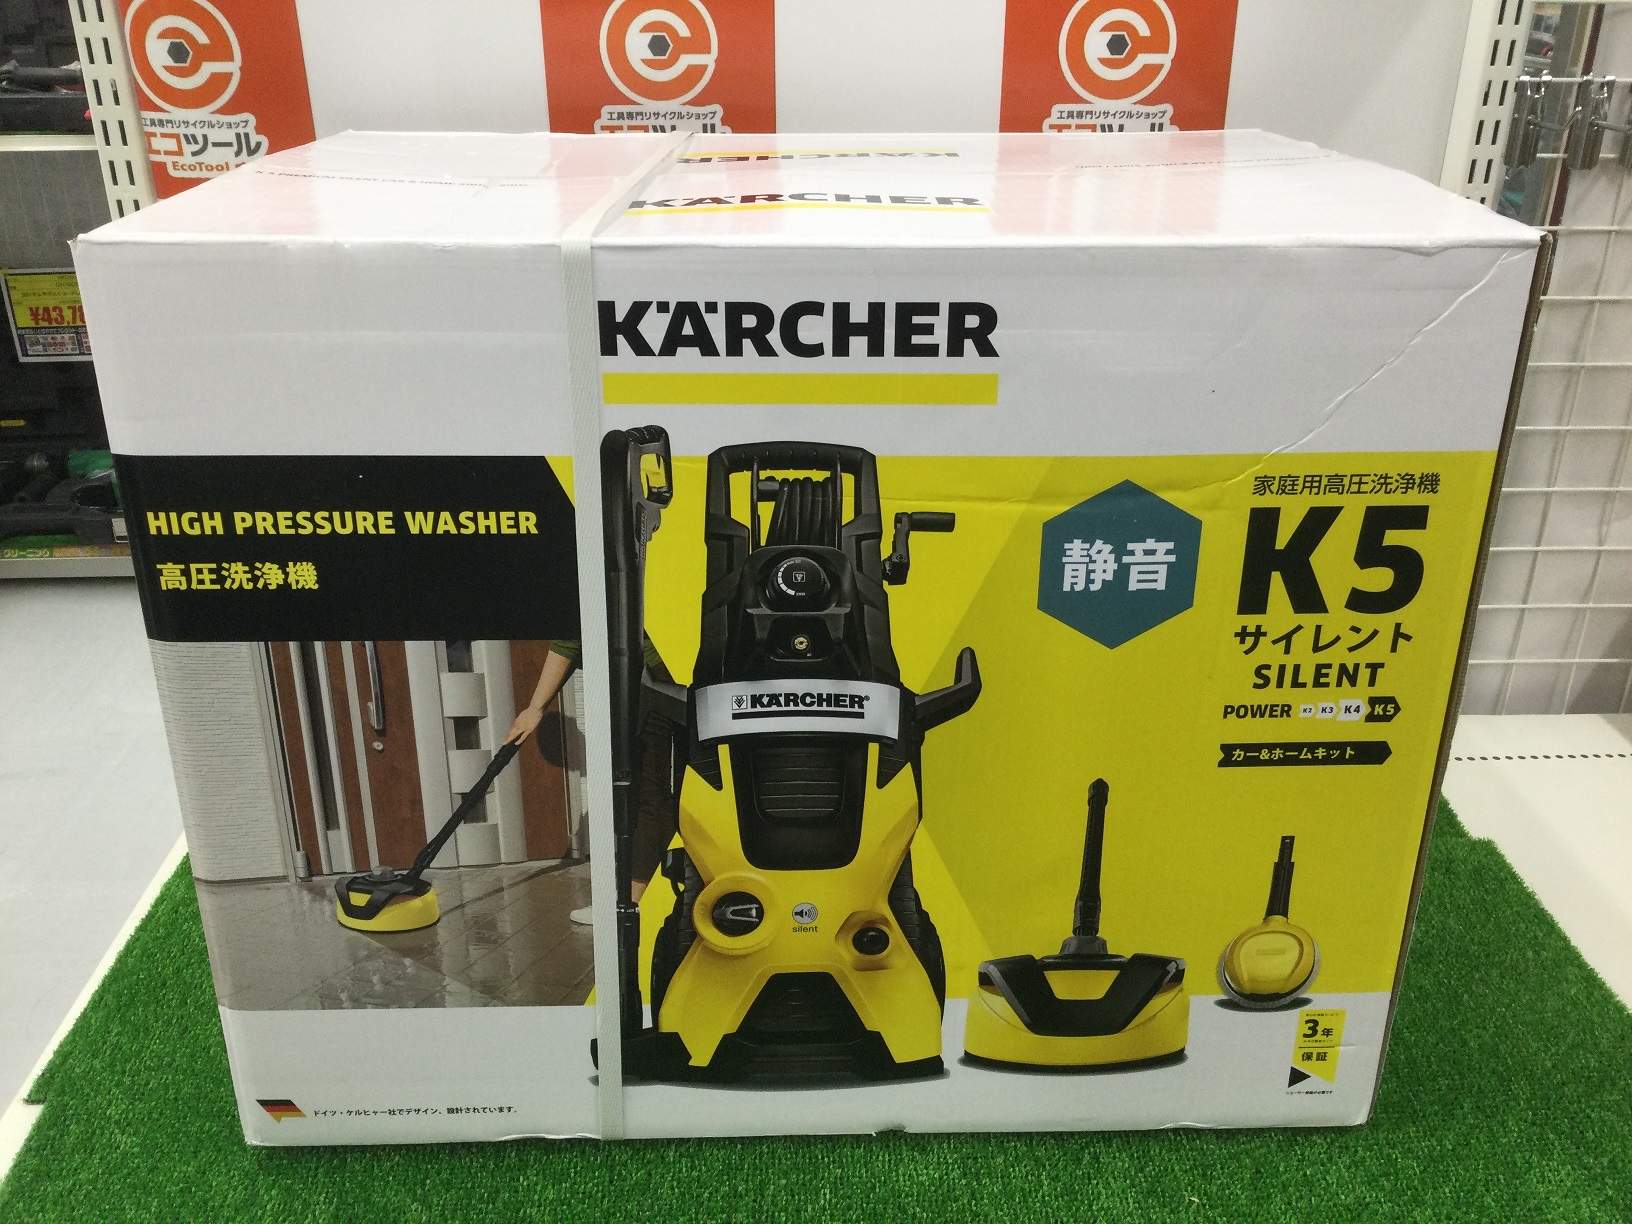 KARCHER/ケルヒャー K5 高圧洗浄機サイレントカーアンドホームキット